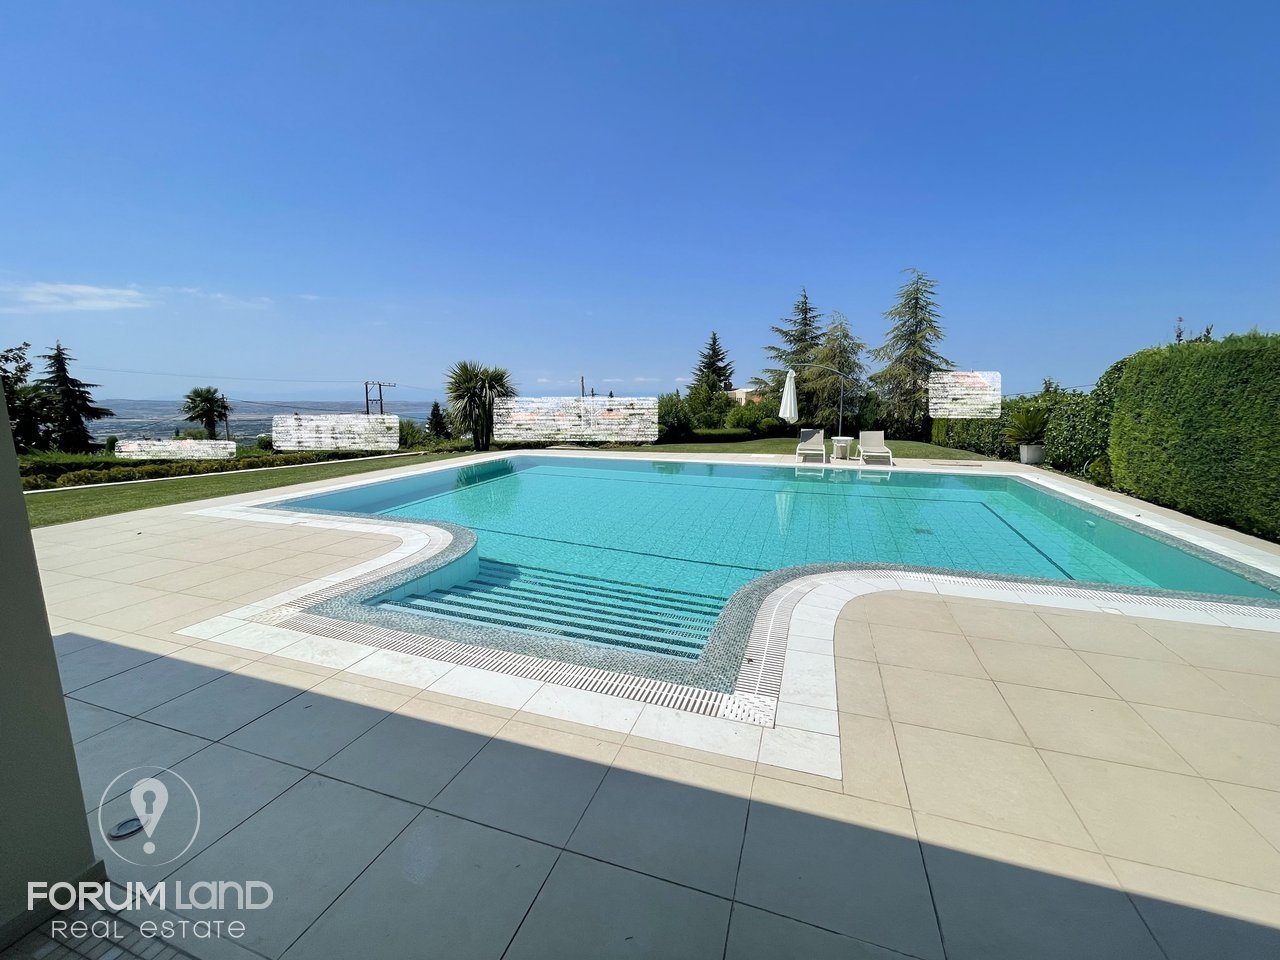 Forumland Real Estate, pool